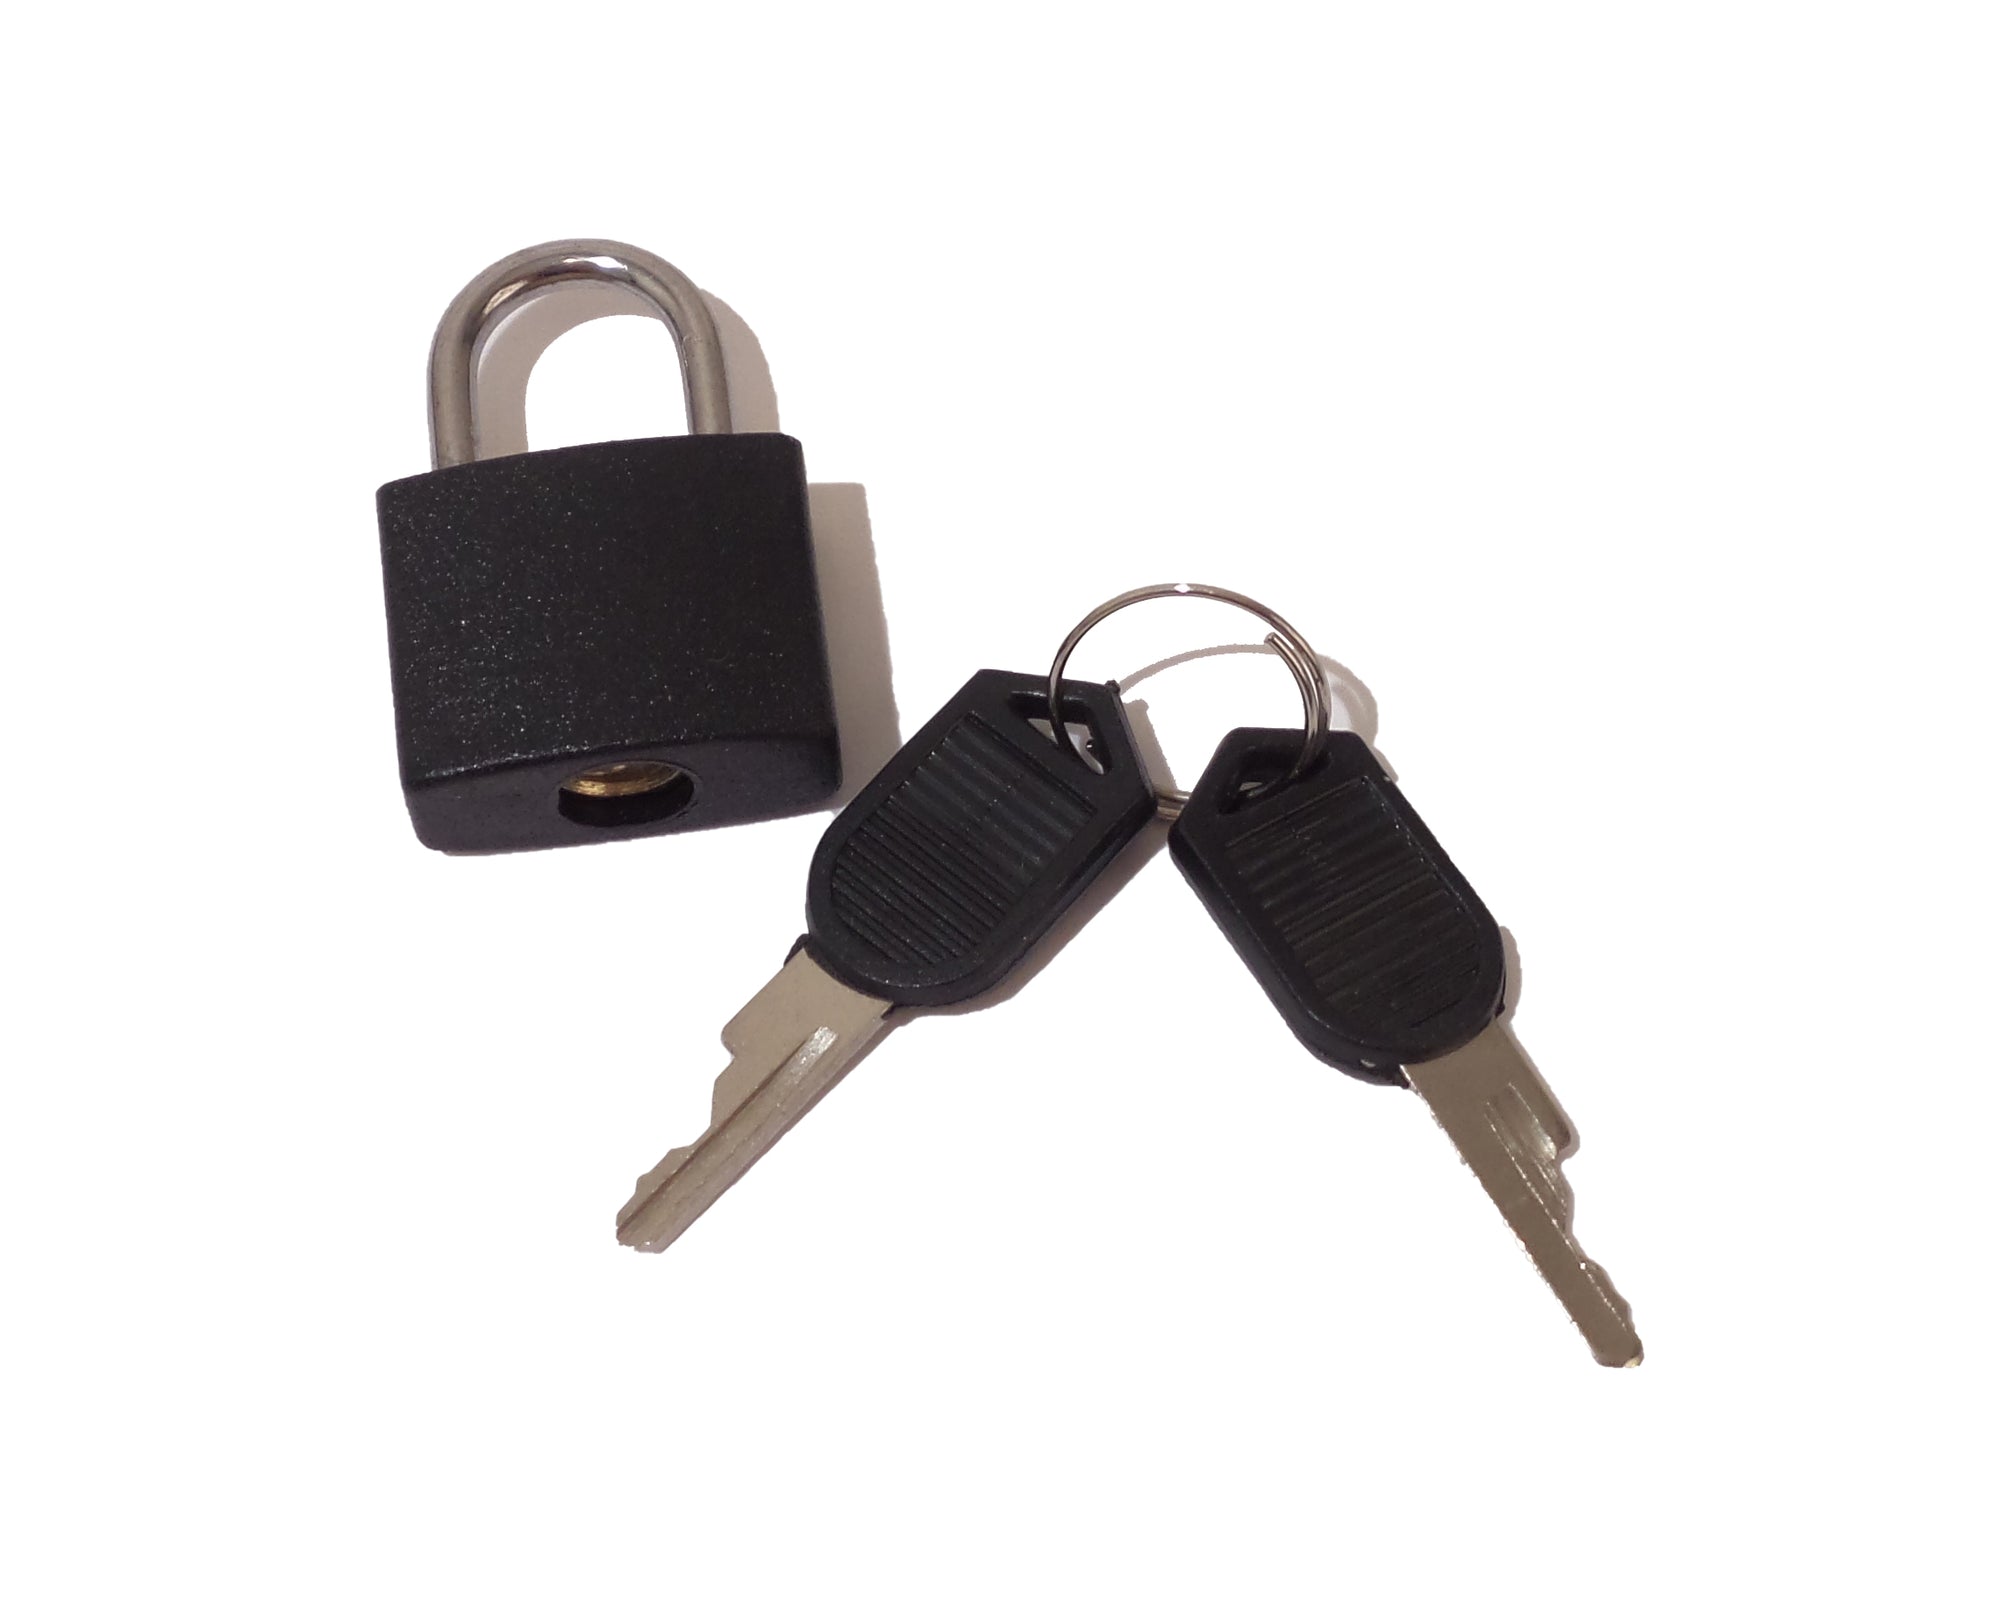 High Security Padlock with 2 Keys - Black